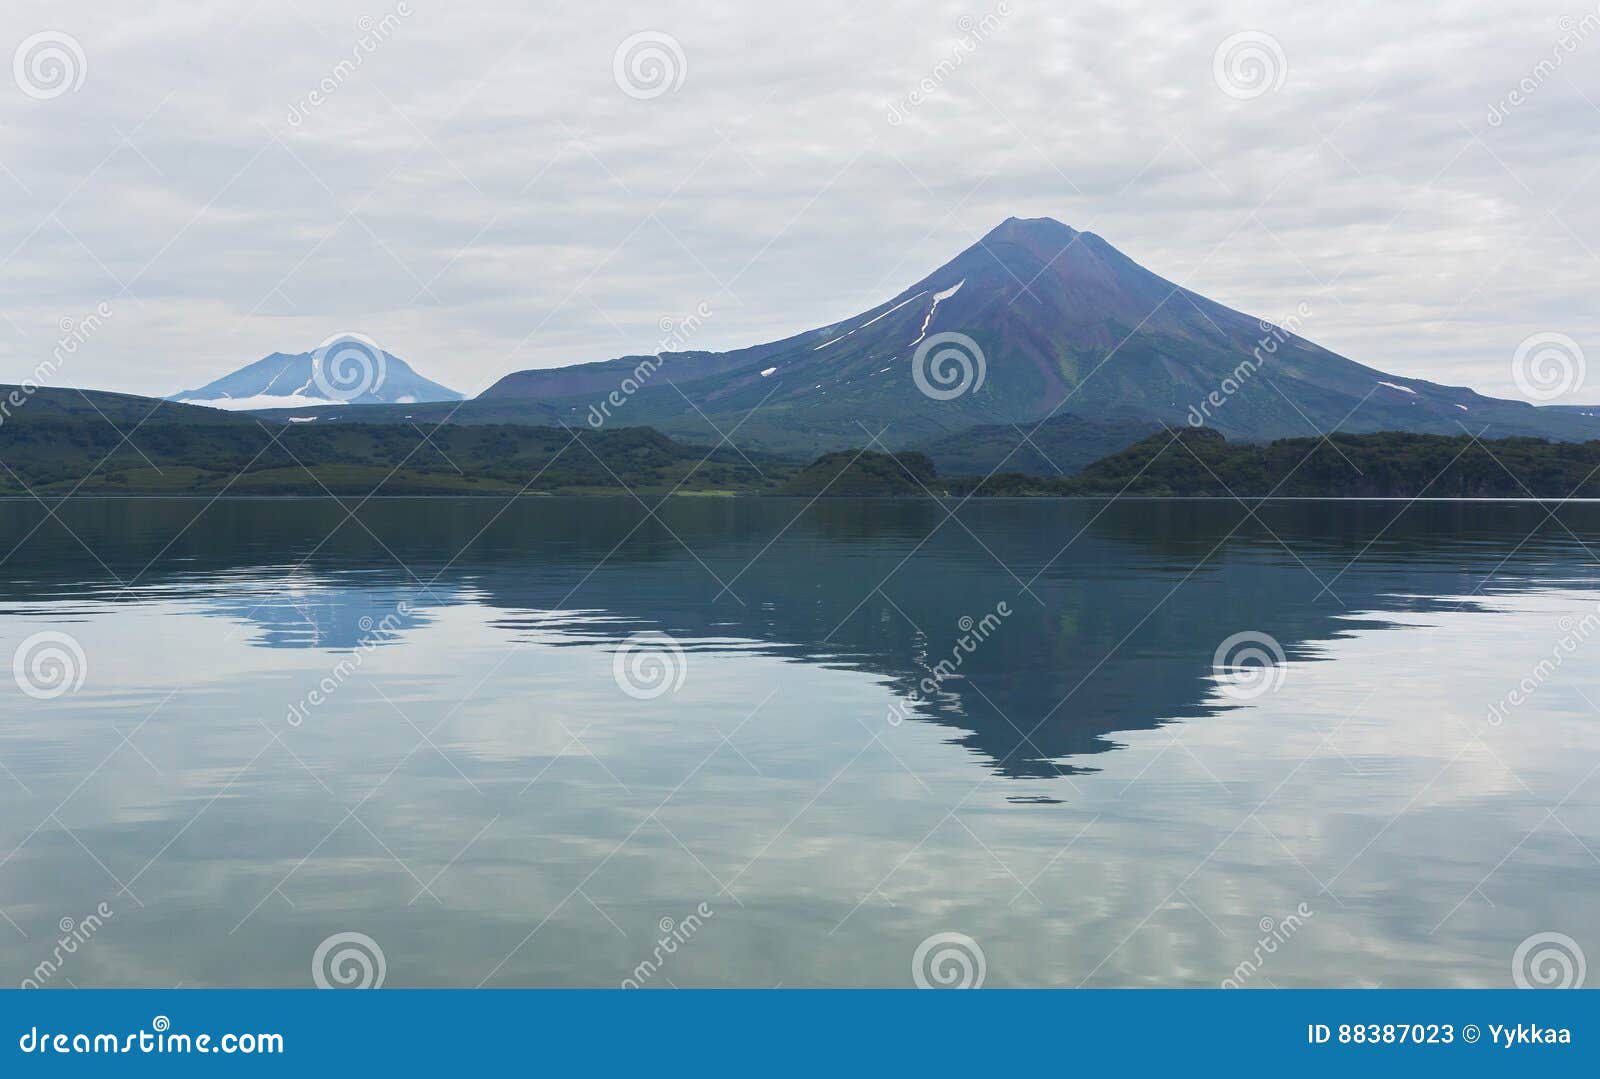 ilyinsky stratovolcano near kurile lake.